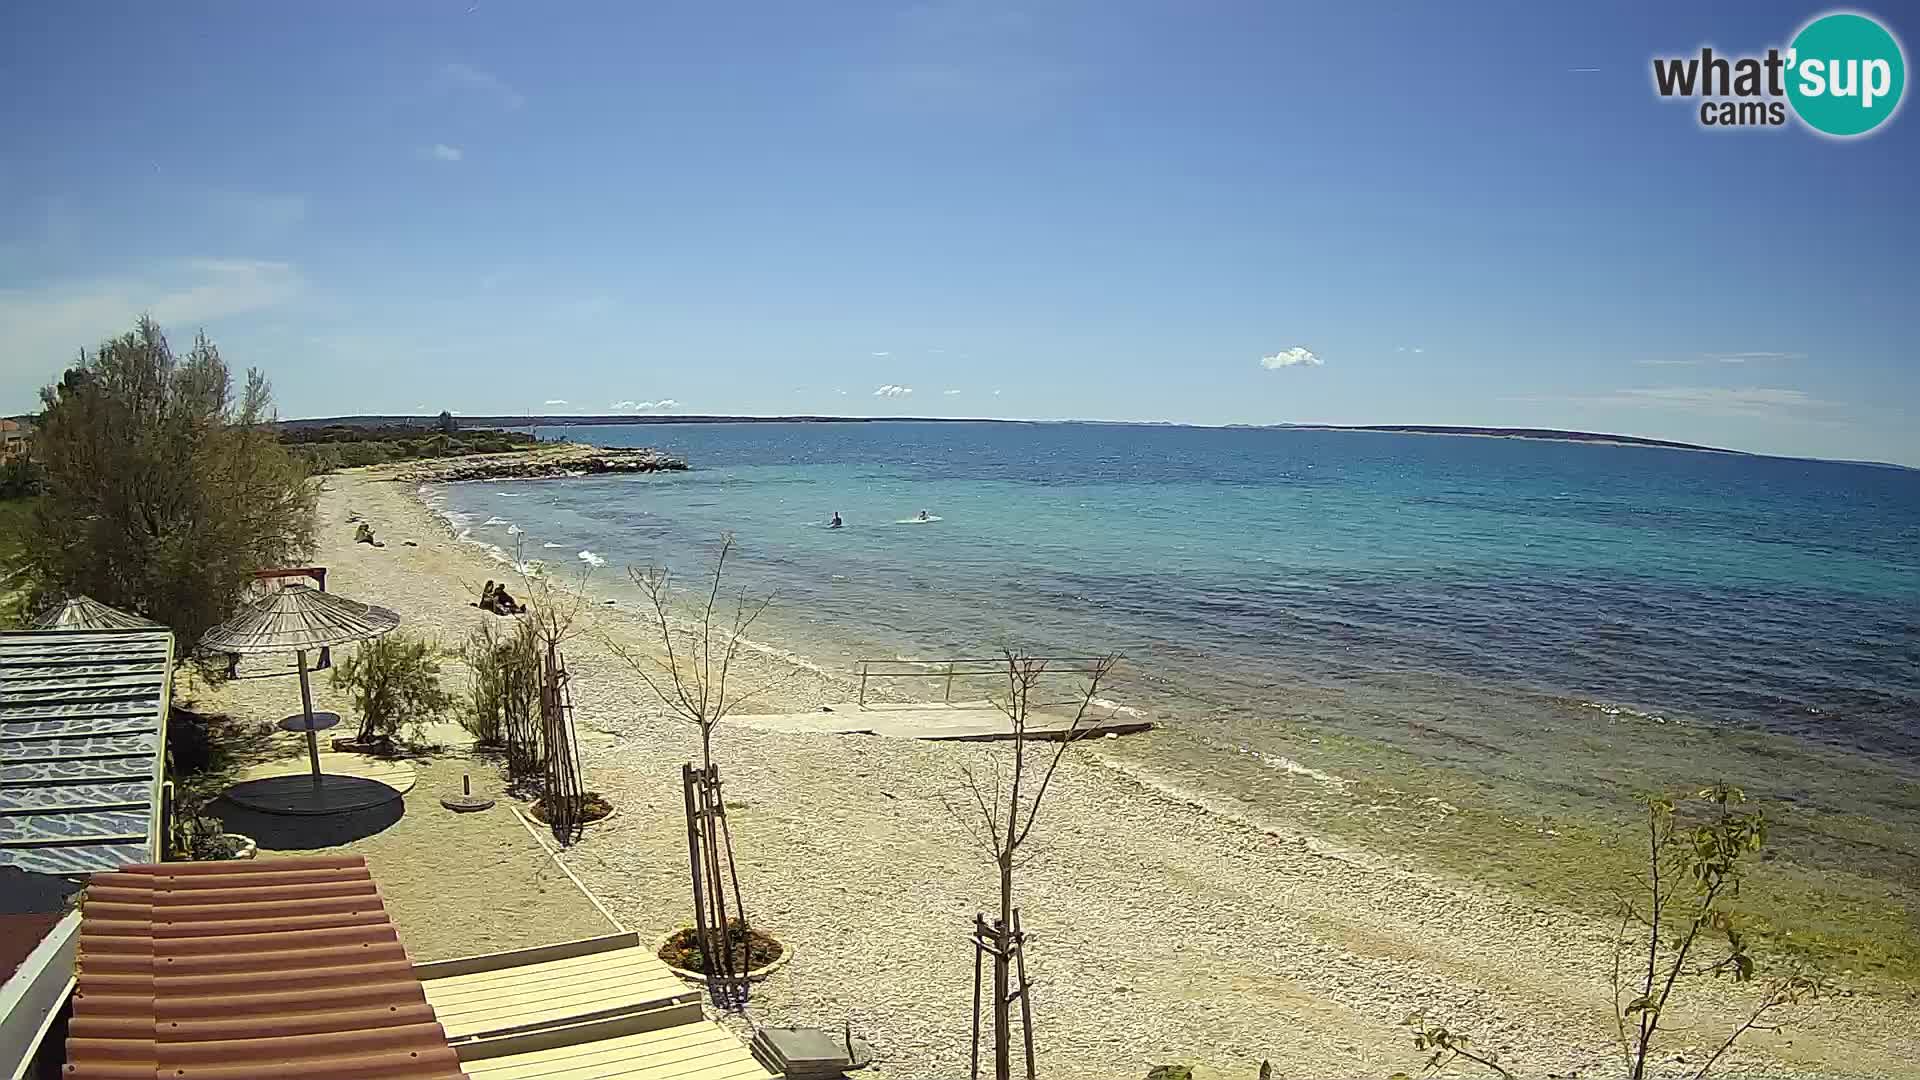 Gajac beach – Pag